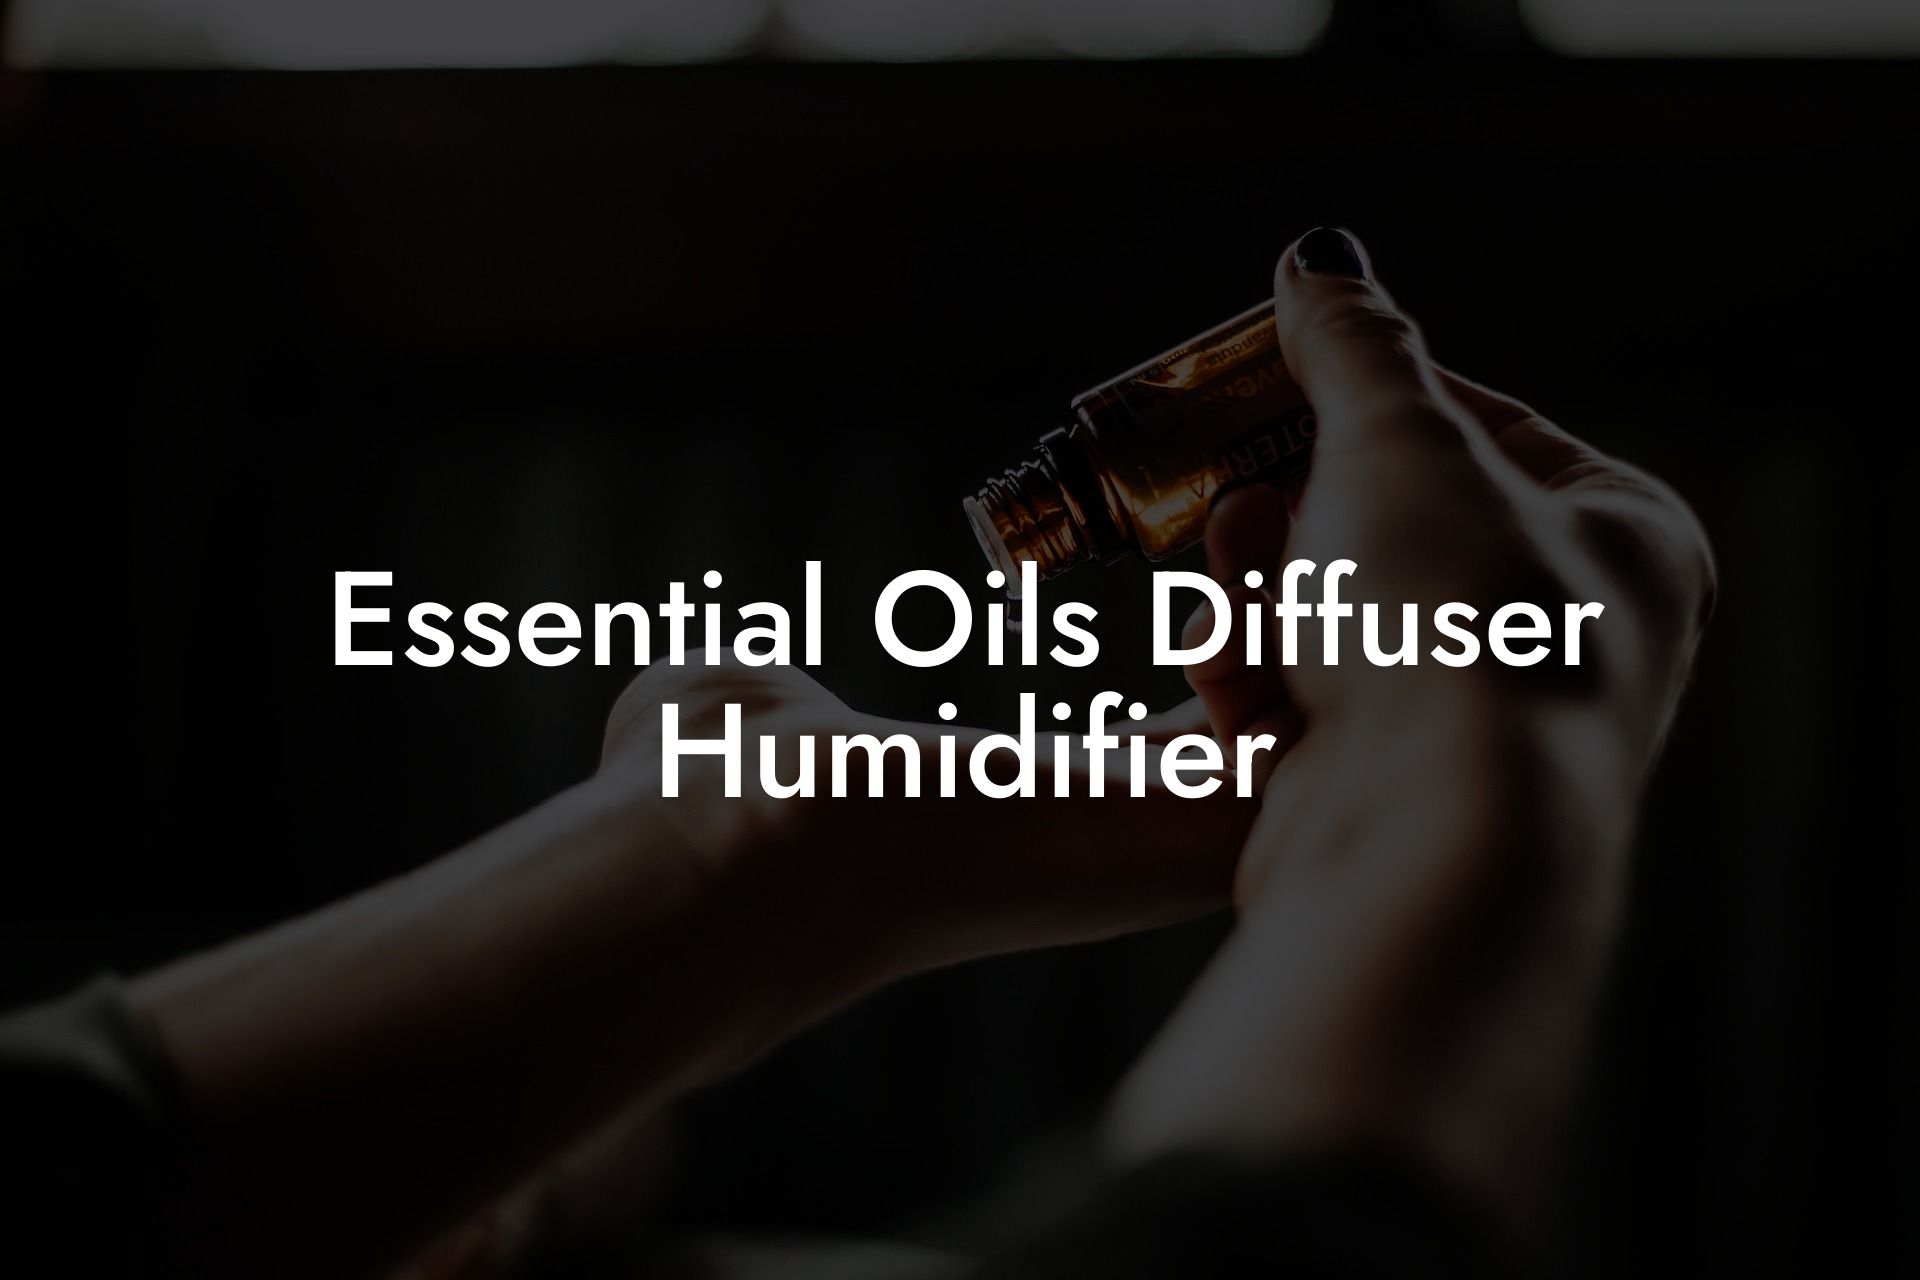 Essential Oils Diffuser Humidifier